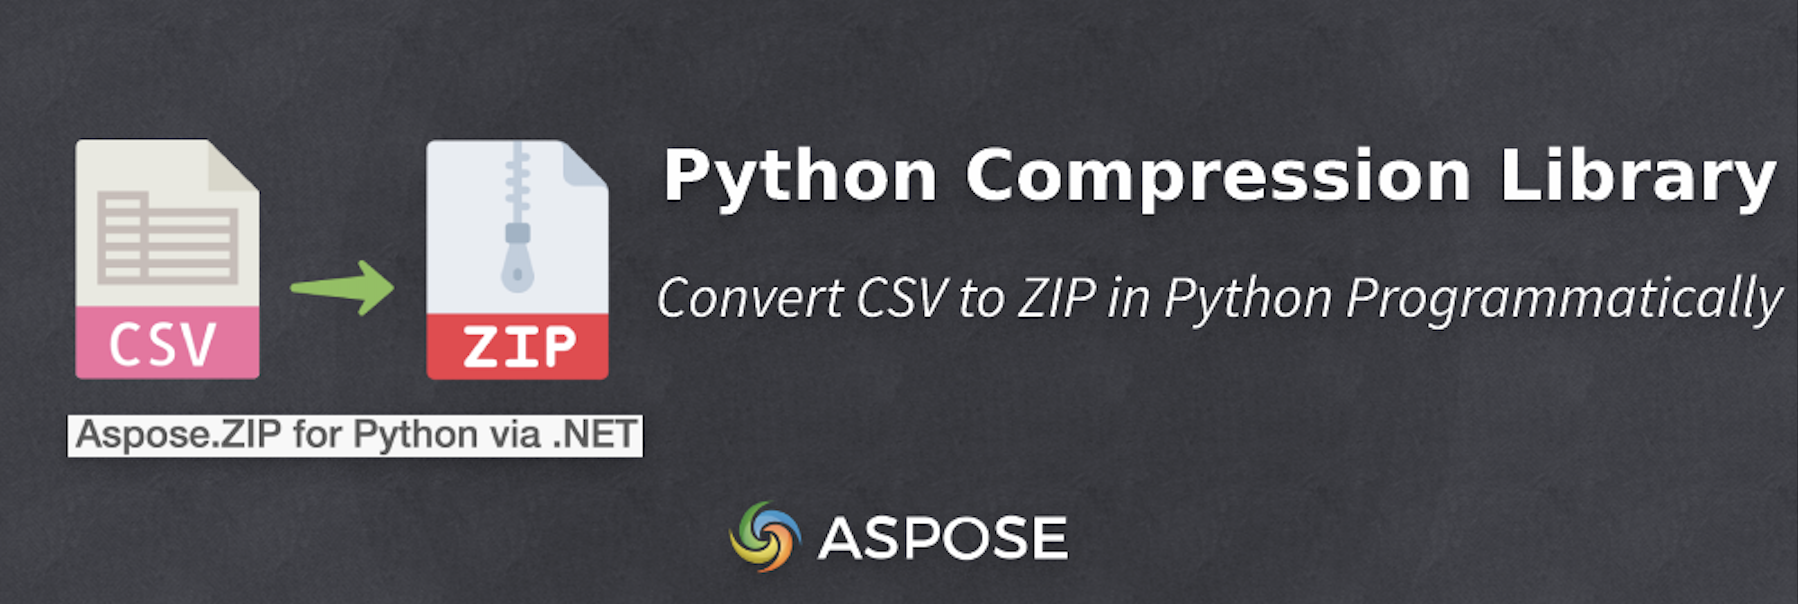 Nén tệp CSV bằng Python - CSV sang ZIP